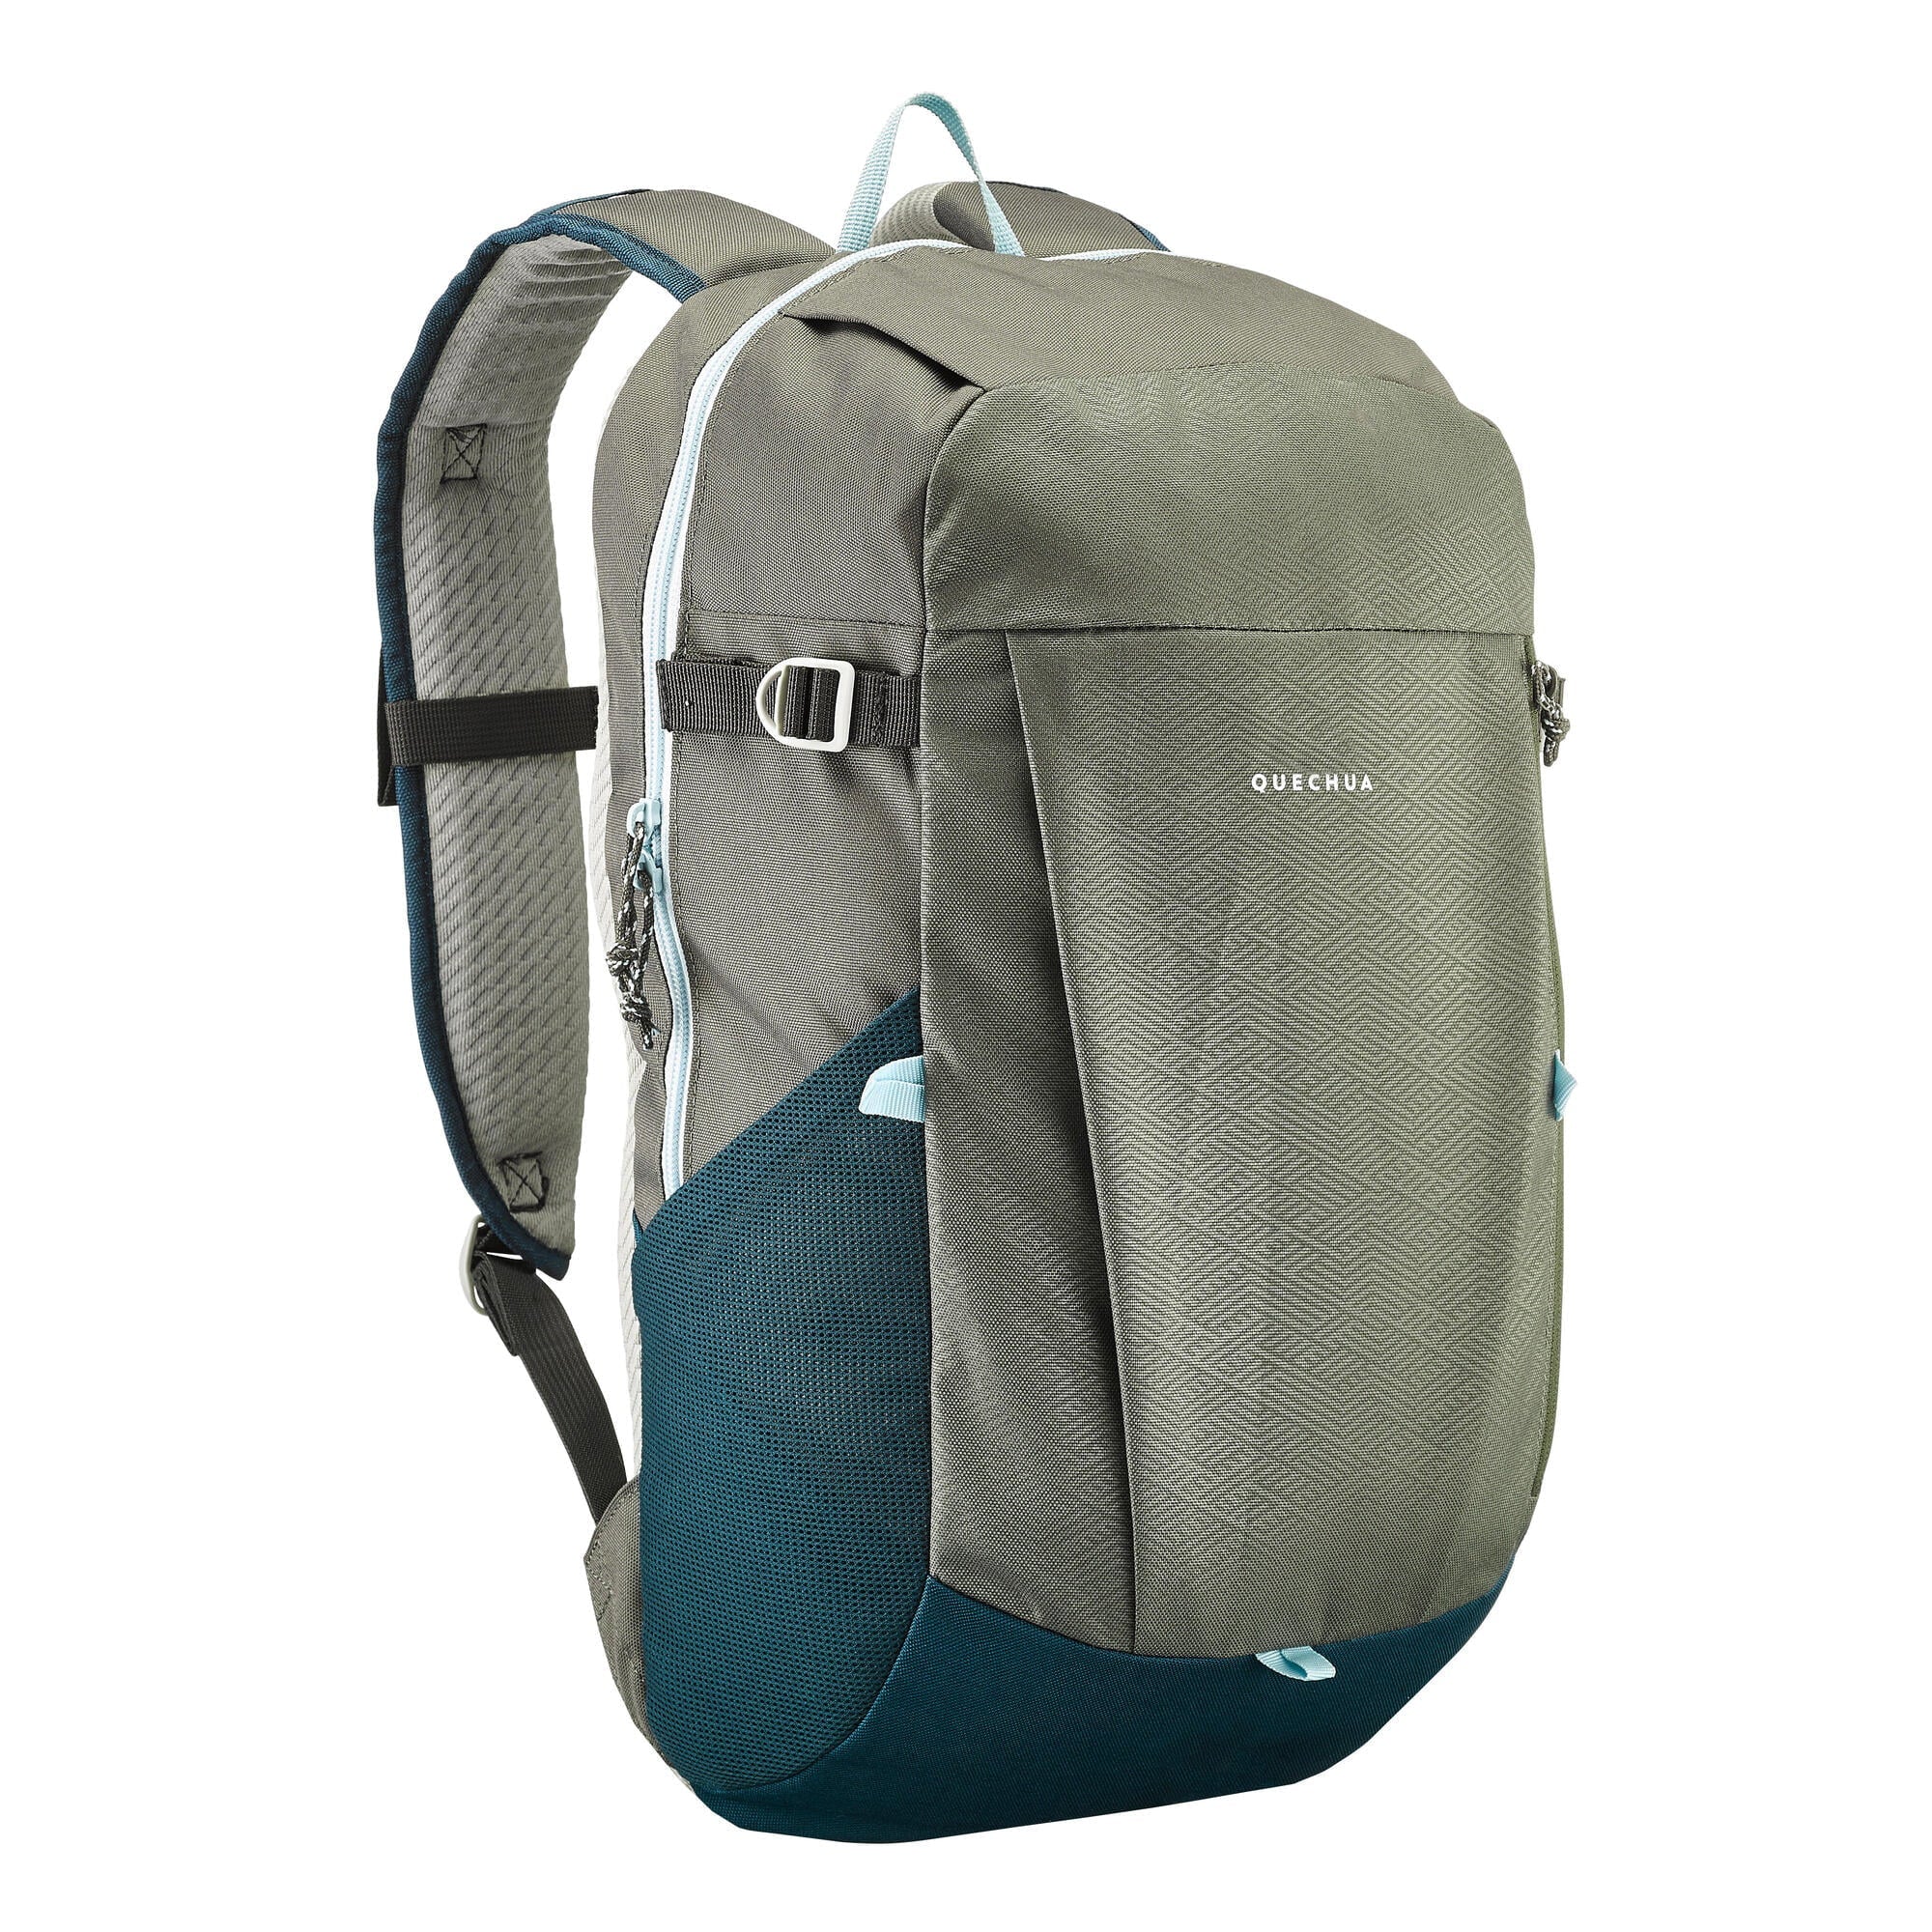 Decathlon Quechua NH 100 Hiking Backpack, Black, 20L, 4646171 Daypack | eBay